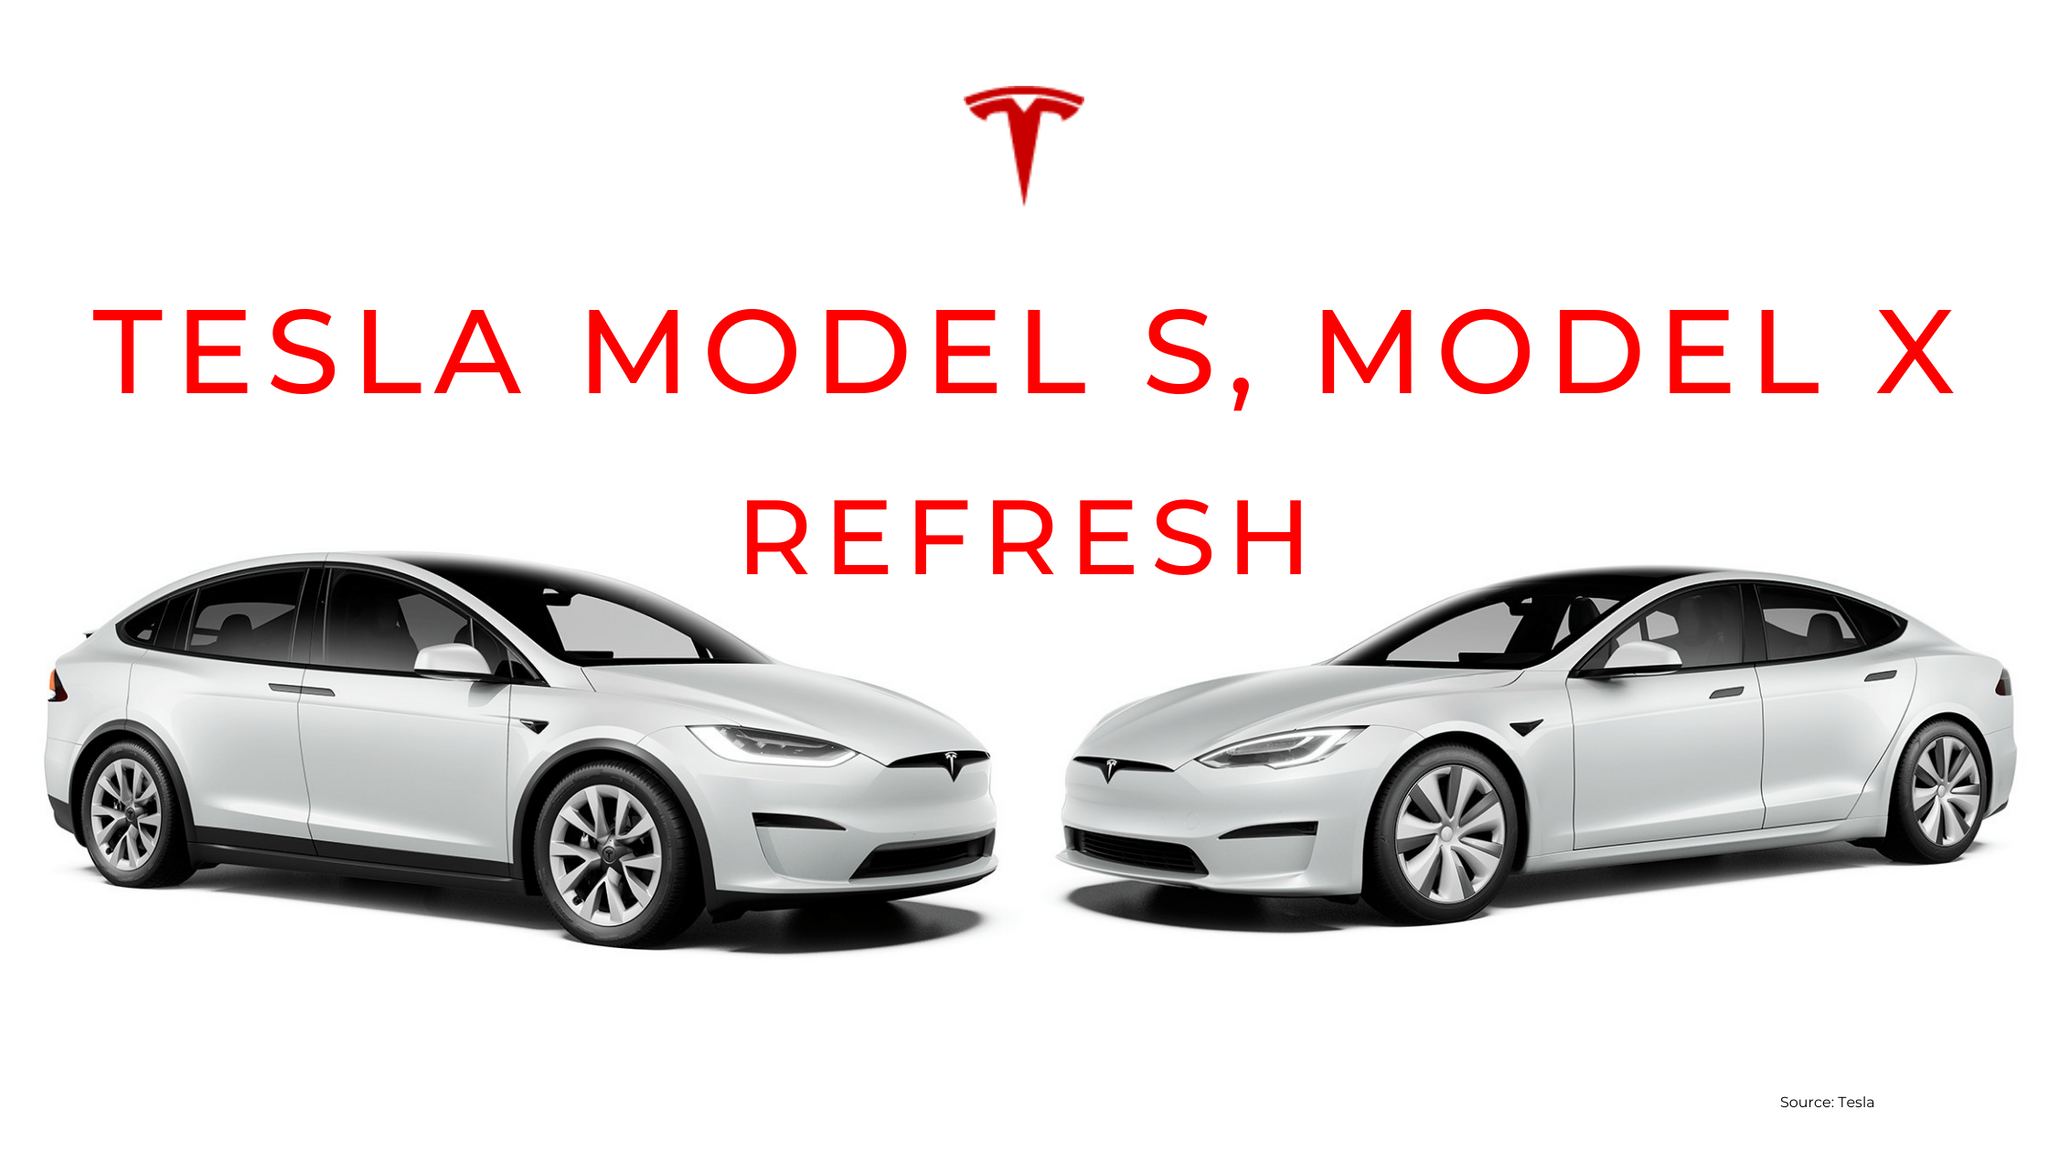 Tesla Model S, Model X refresh: 2021